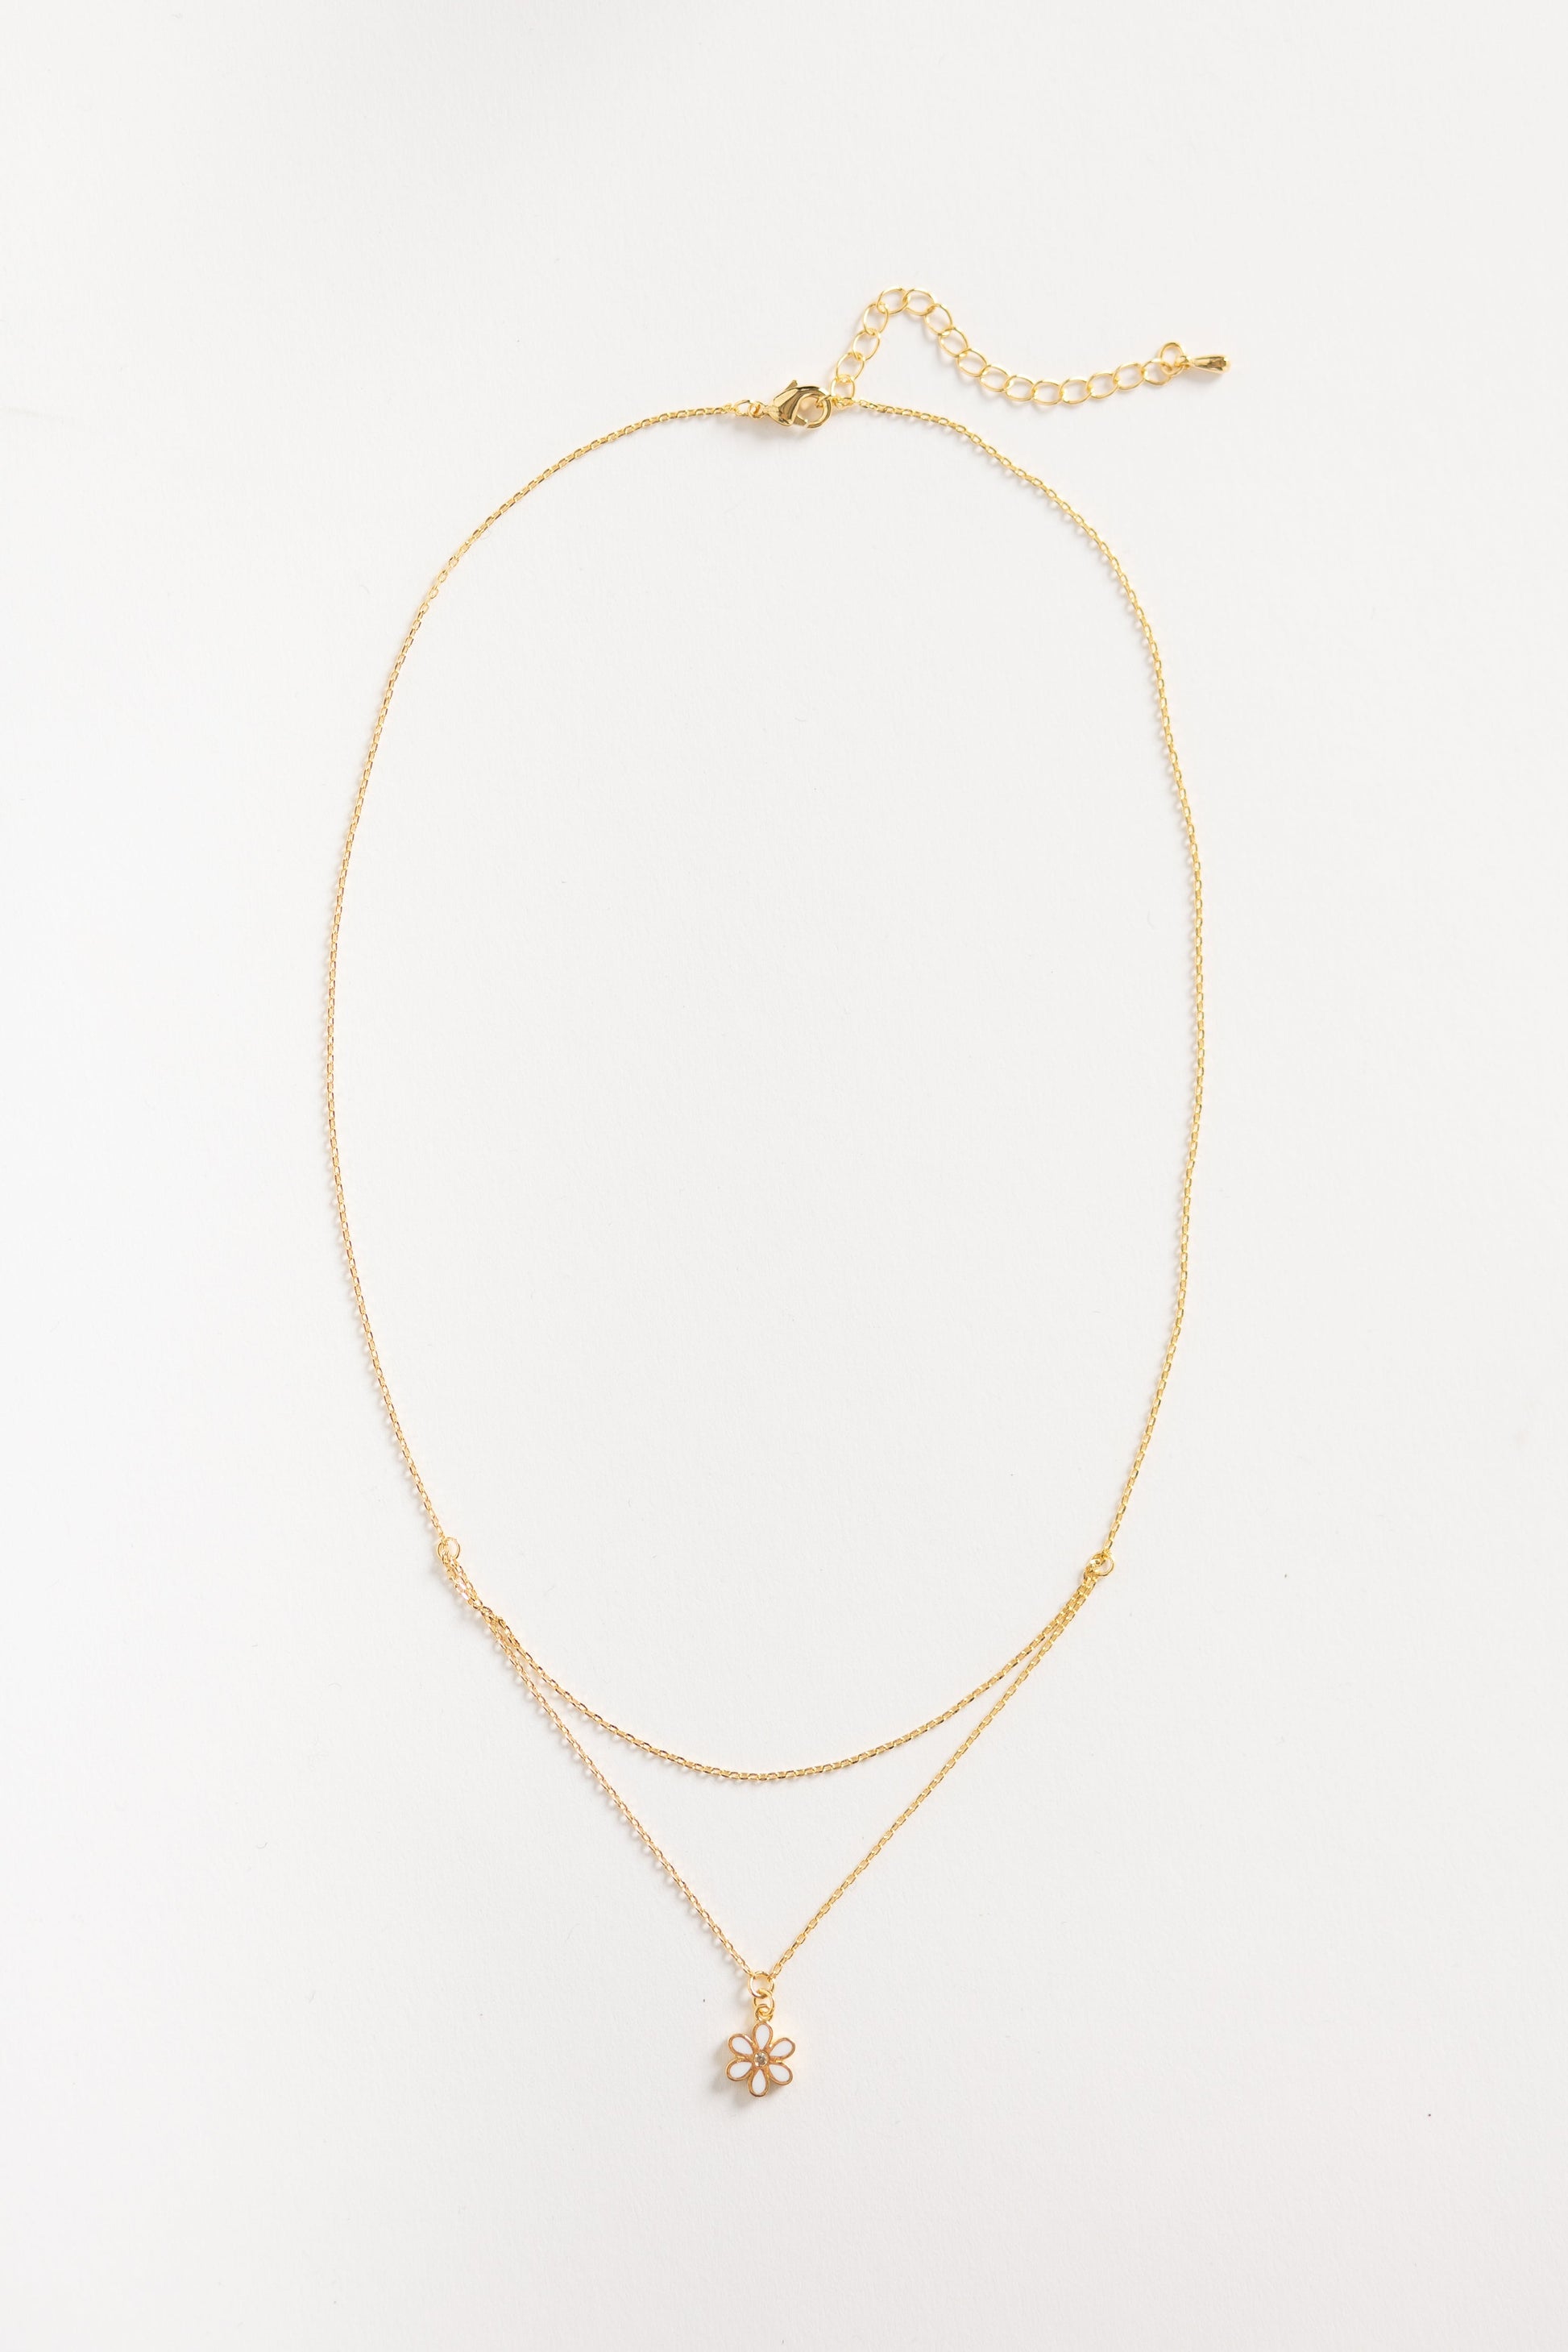 Cove Daisy Double Chain Necklace WOMEN'S NECKLACE Cove Accessories 